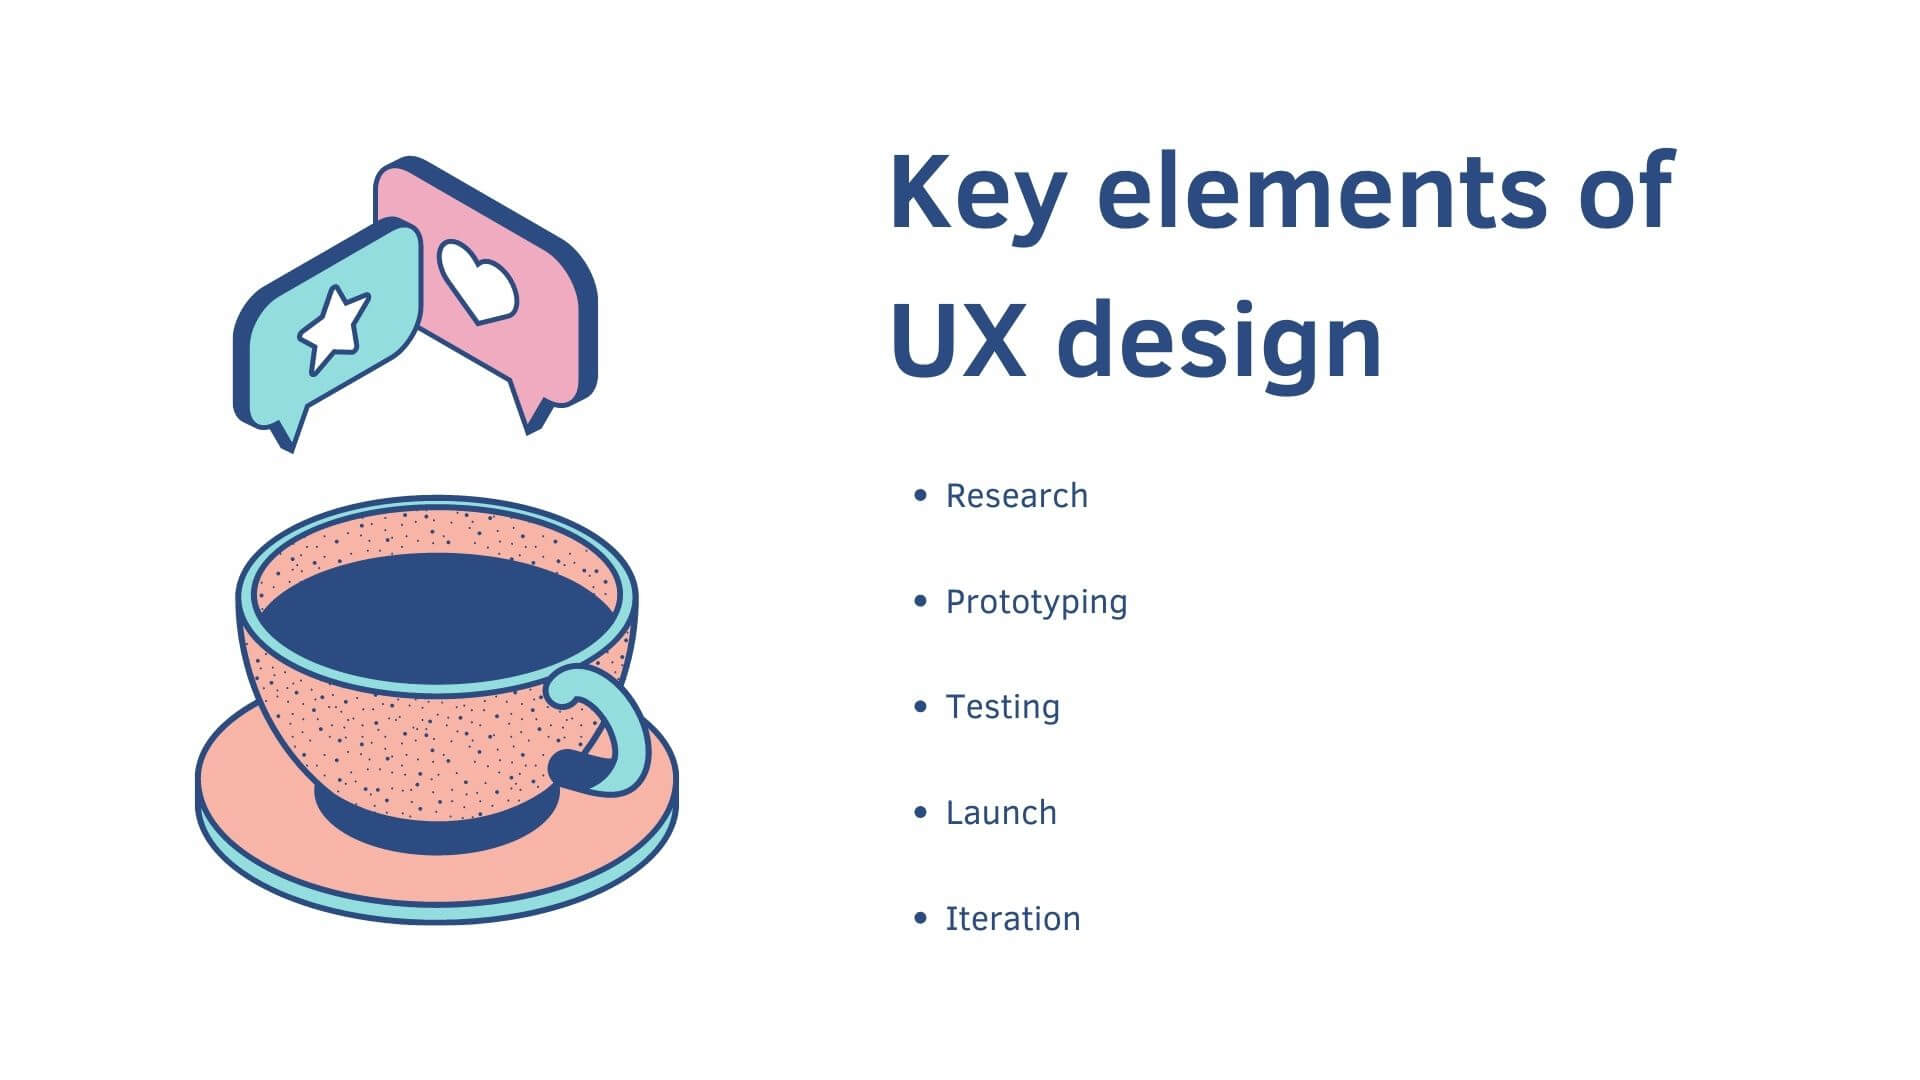 Key elements of UX design